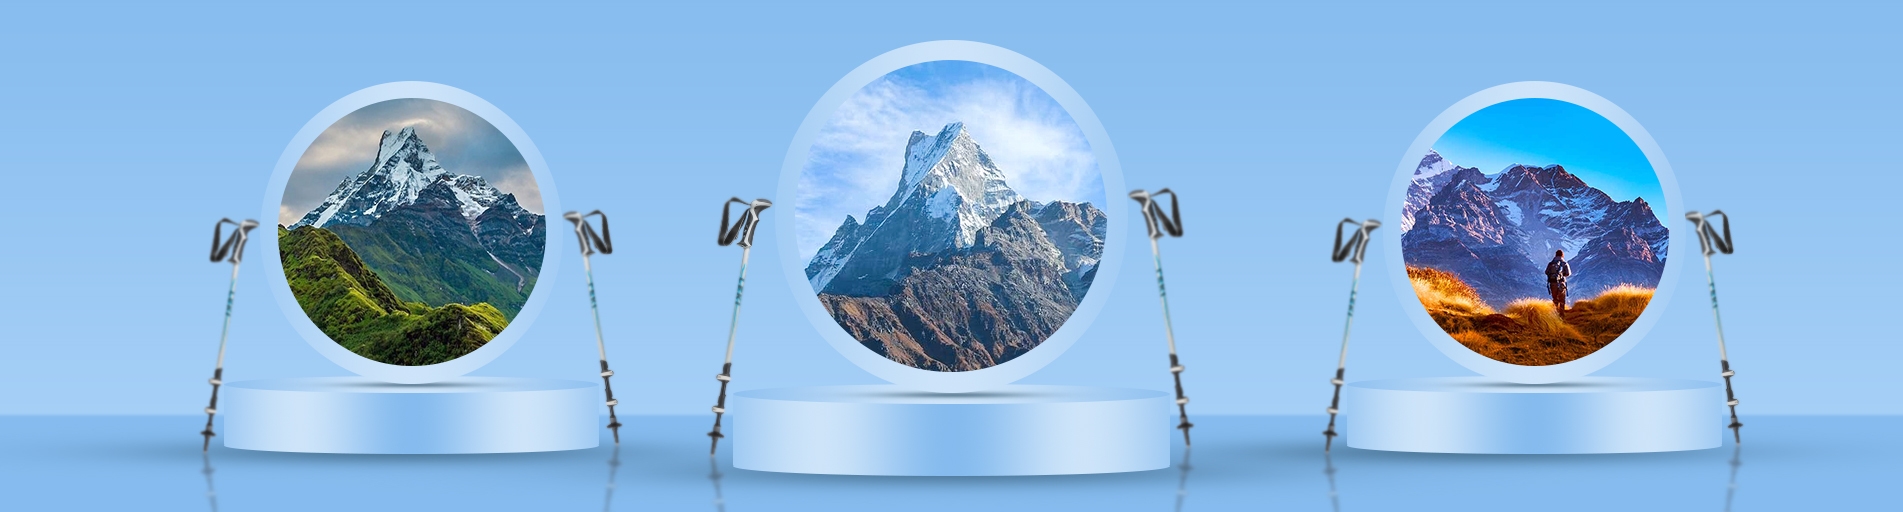 Nepal's Mardi Himal Trek: Weather Forecast, Accommodation, and Stunning Mountain Views